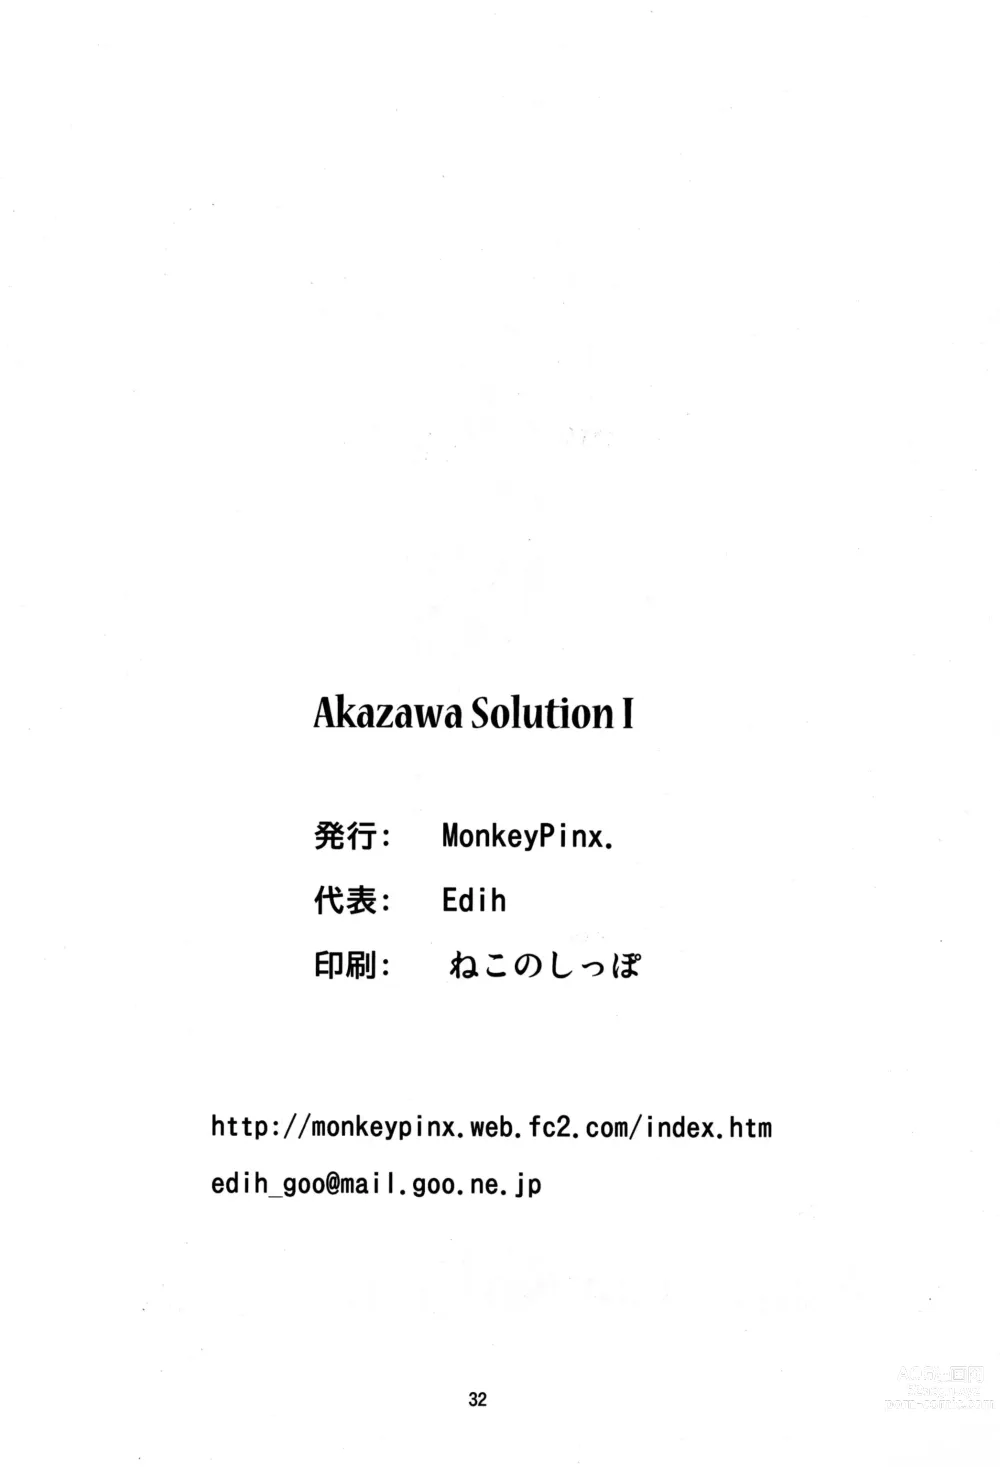 Page 31 of doujinshi Akazawa Solution I